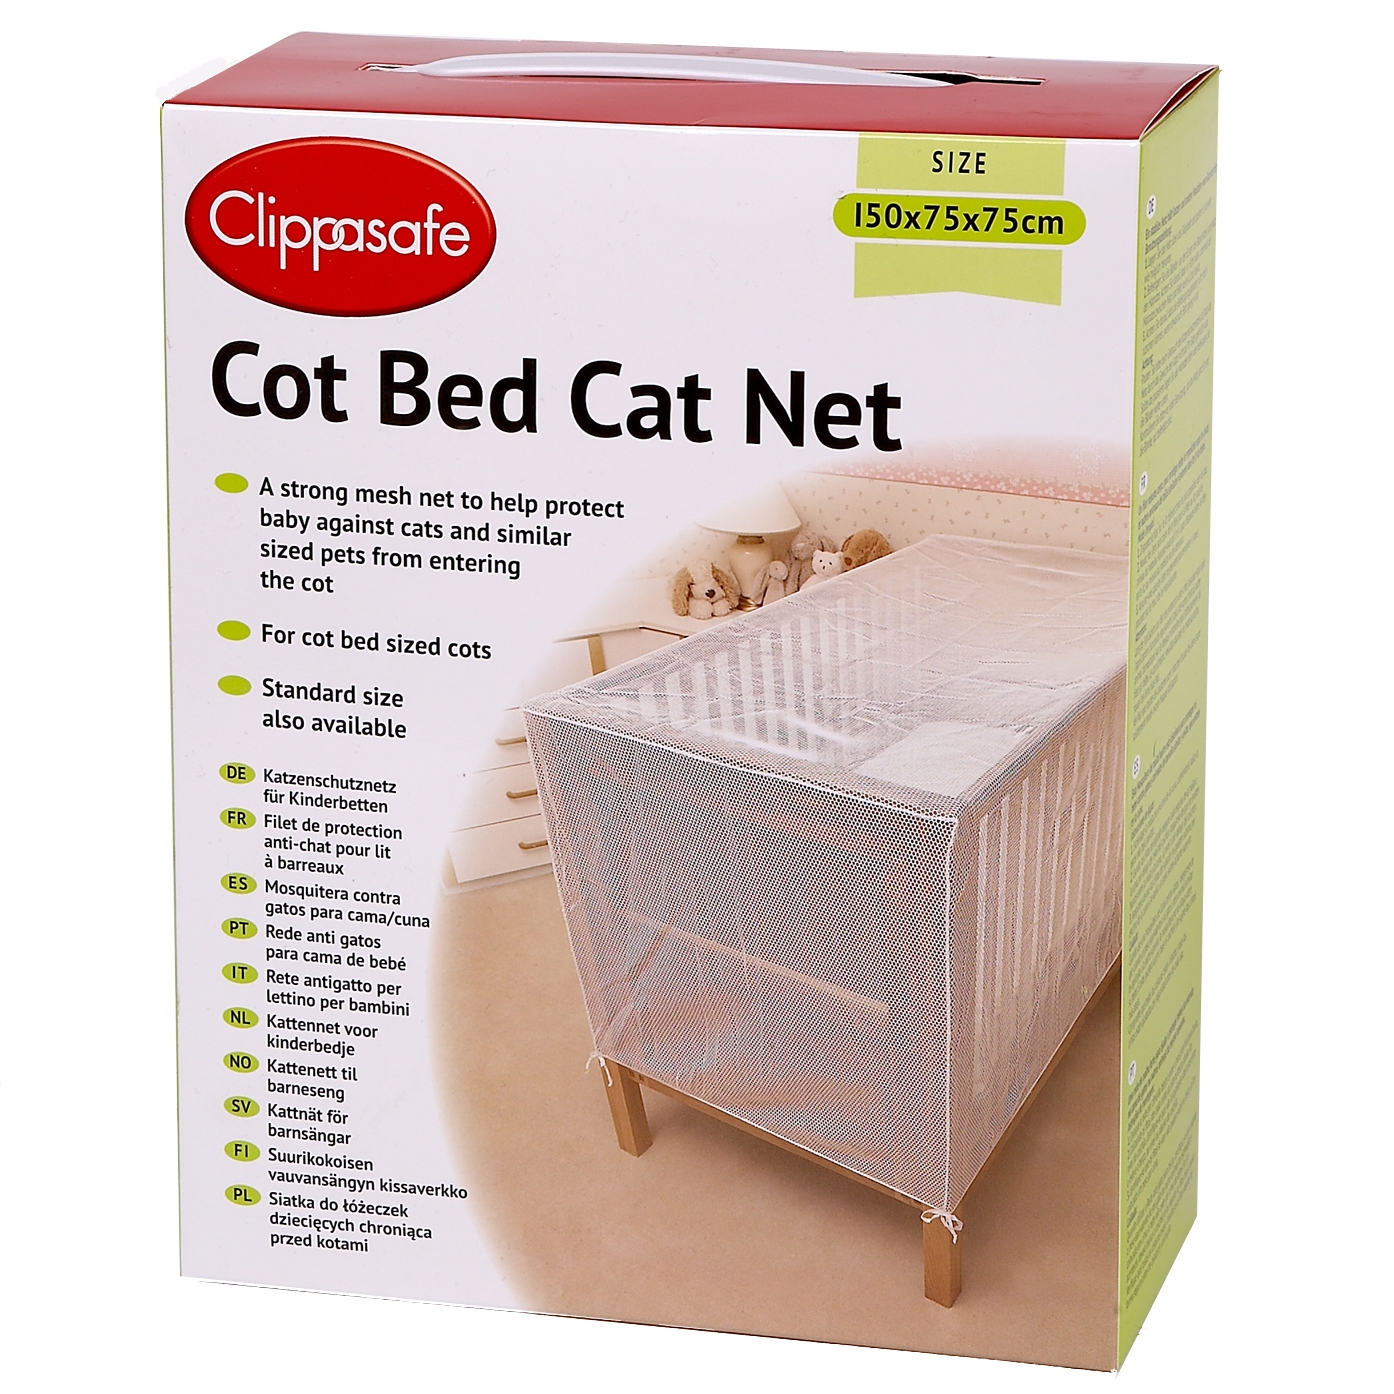 Cot Bed Cat Net || Clippasafe